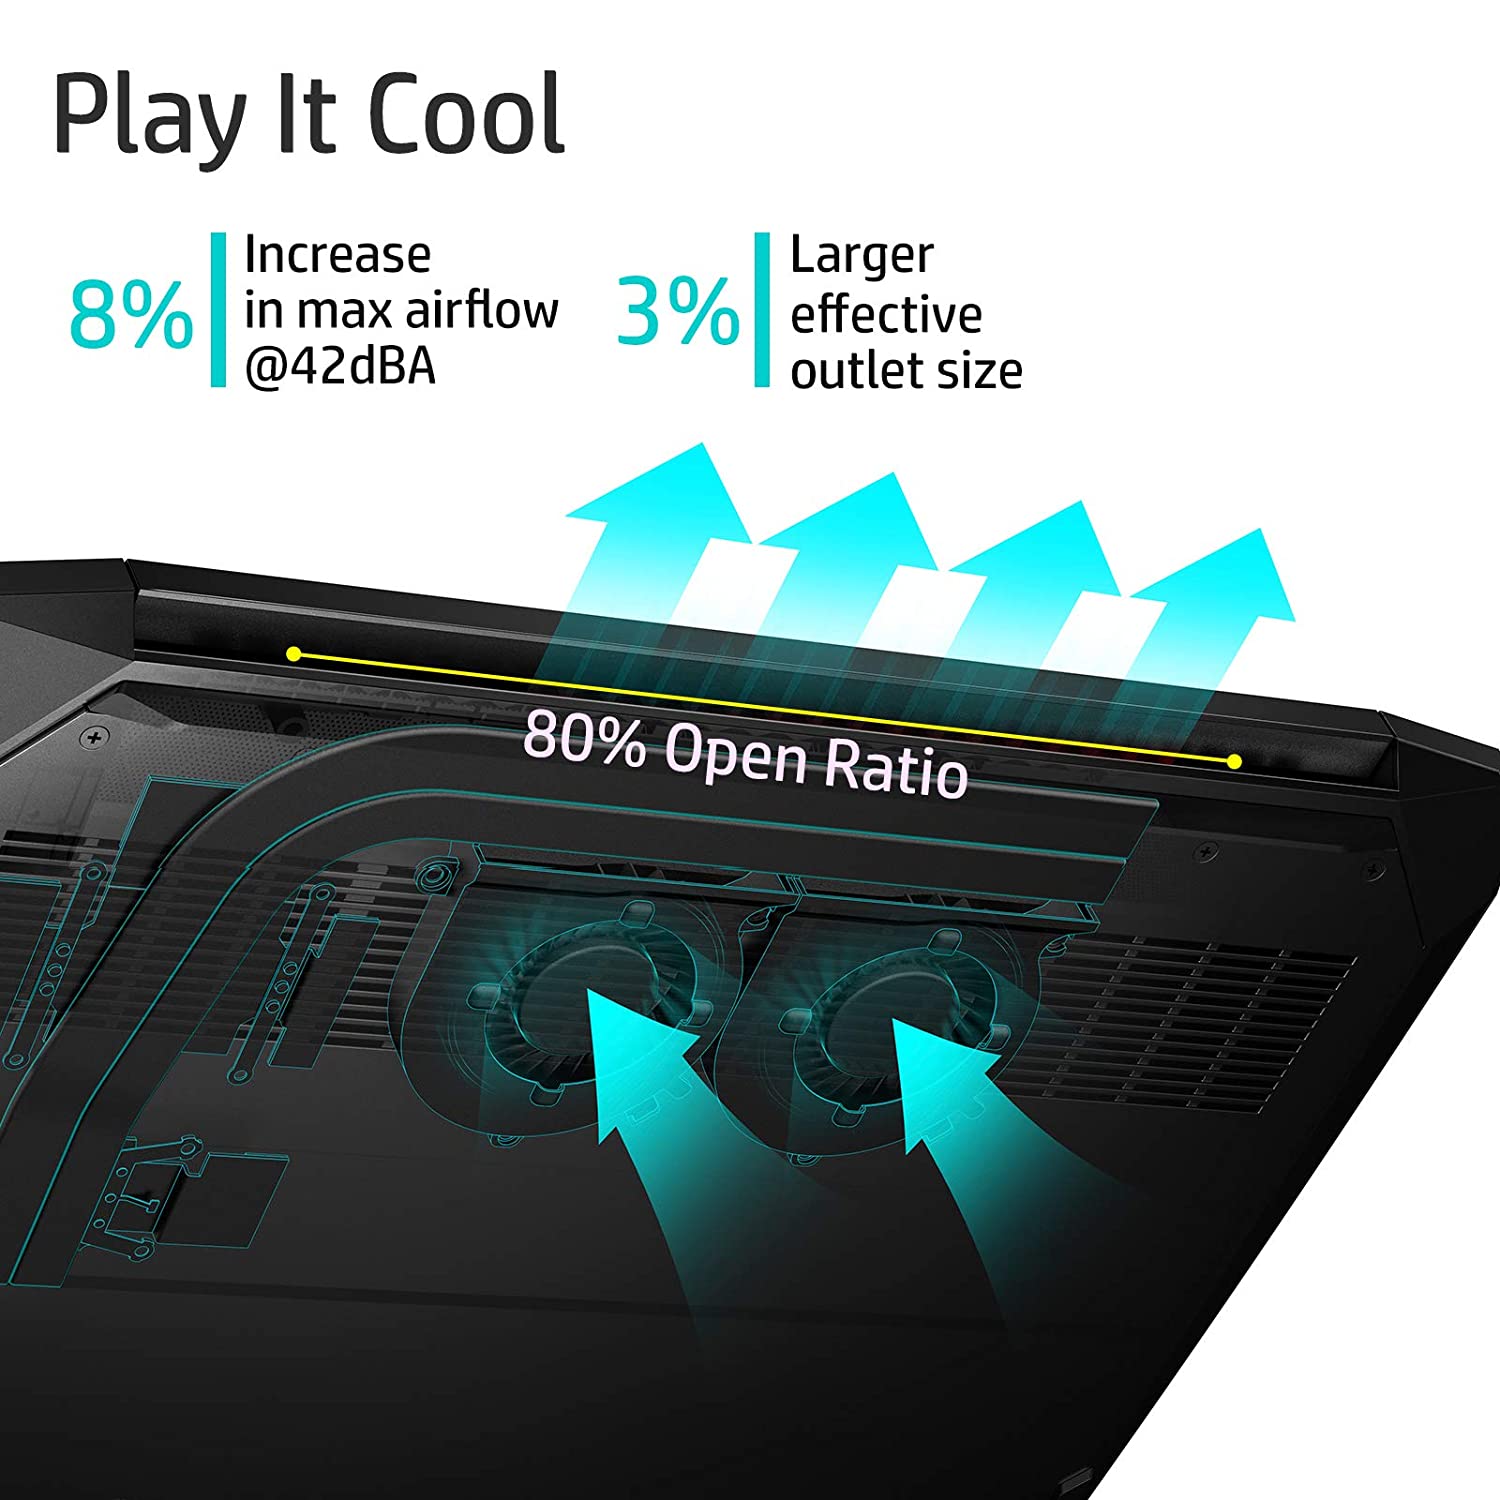 HP Pavilion Gaming 15.6-inch (39.62 cms) FHD Gaming Laptop